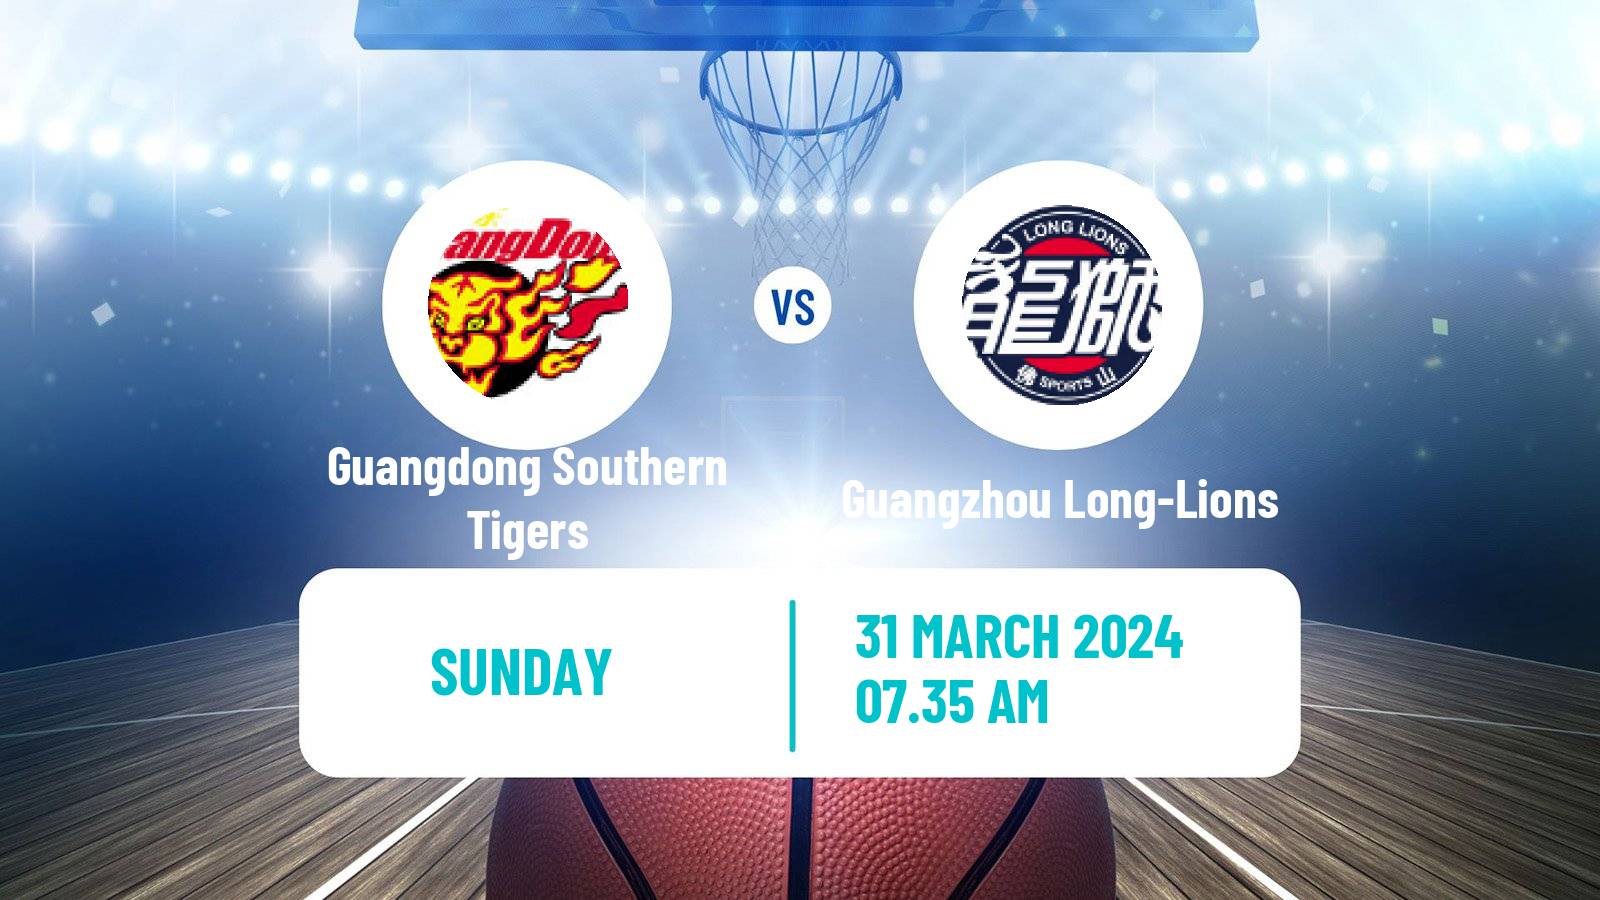 Basketball CBA Guangdong Southern Tigers - Guangzhou Long-Lions